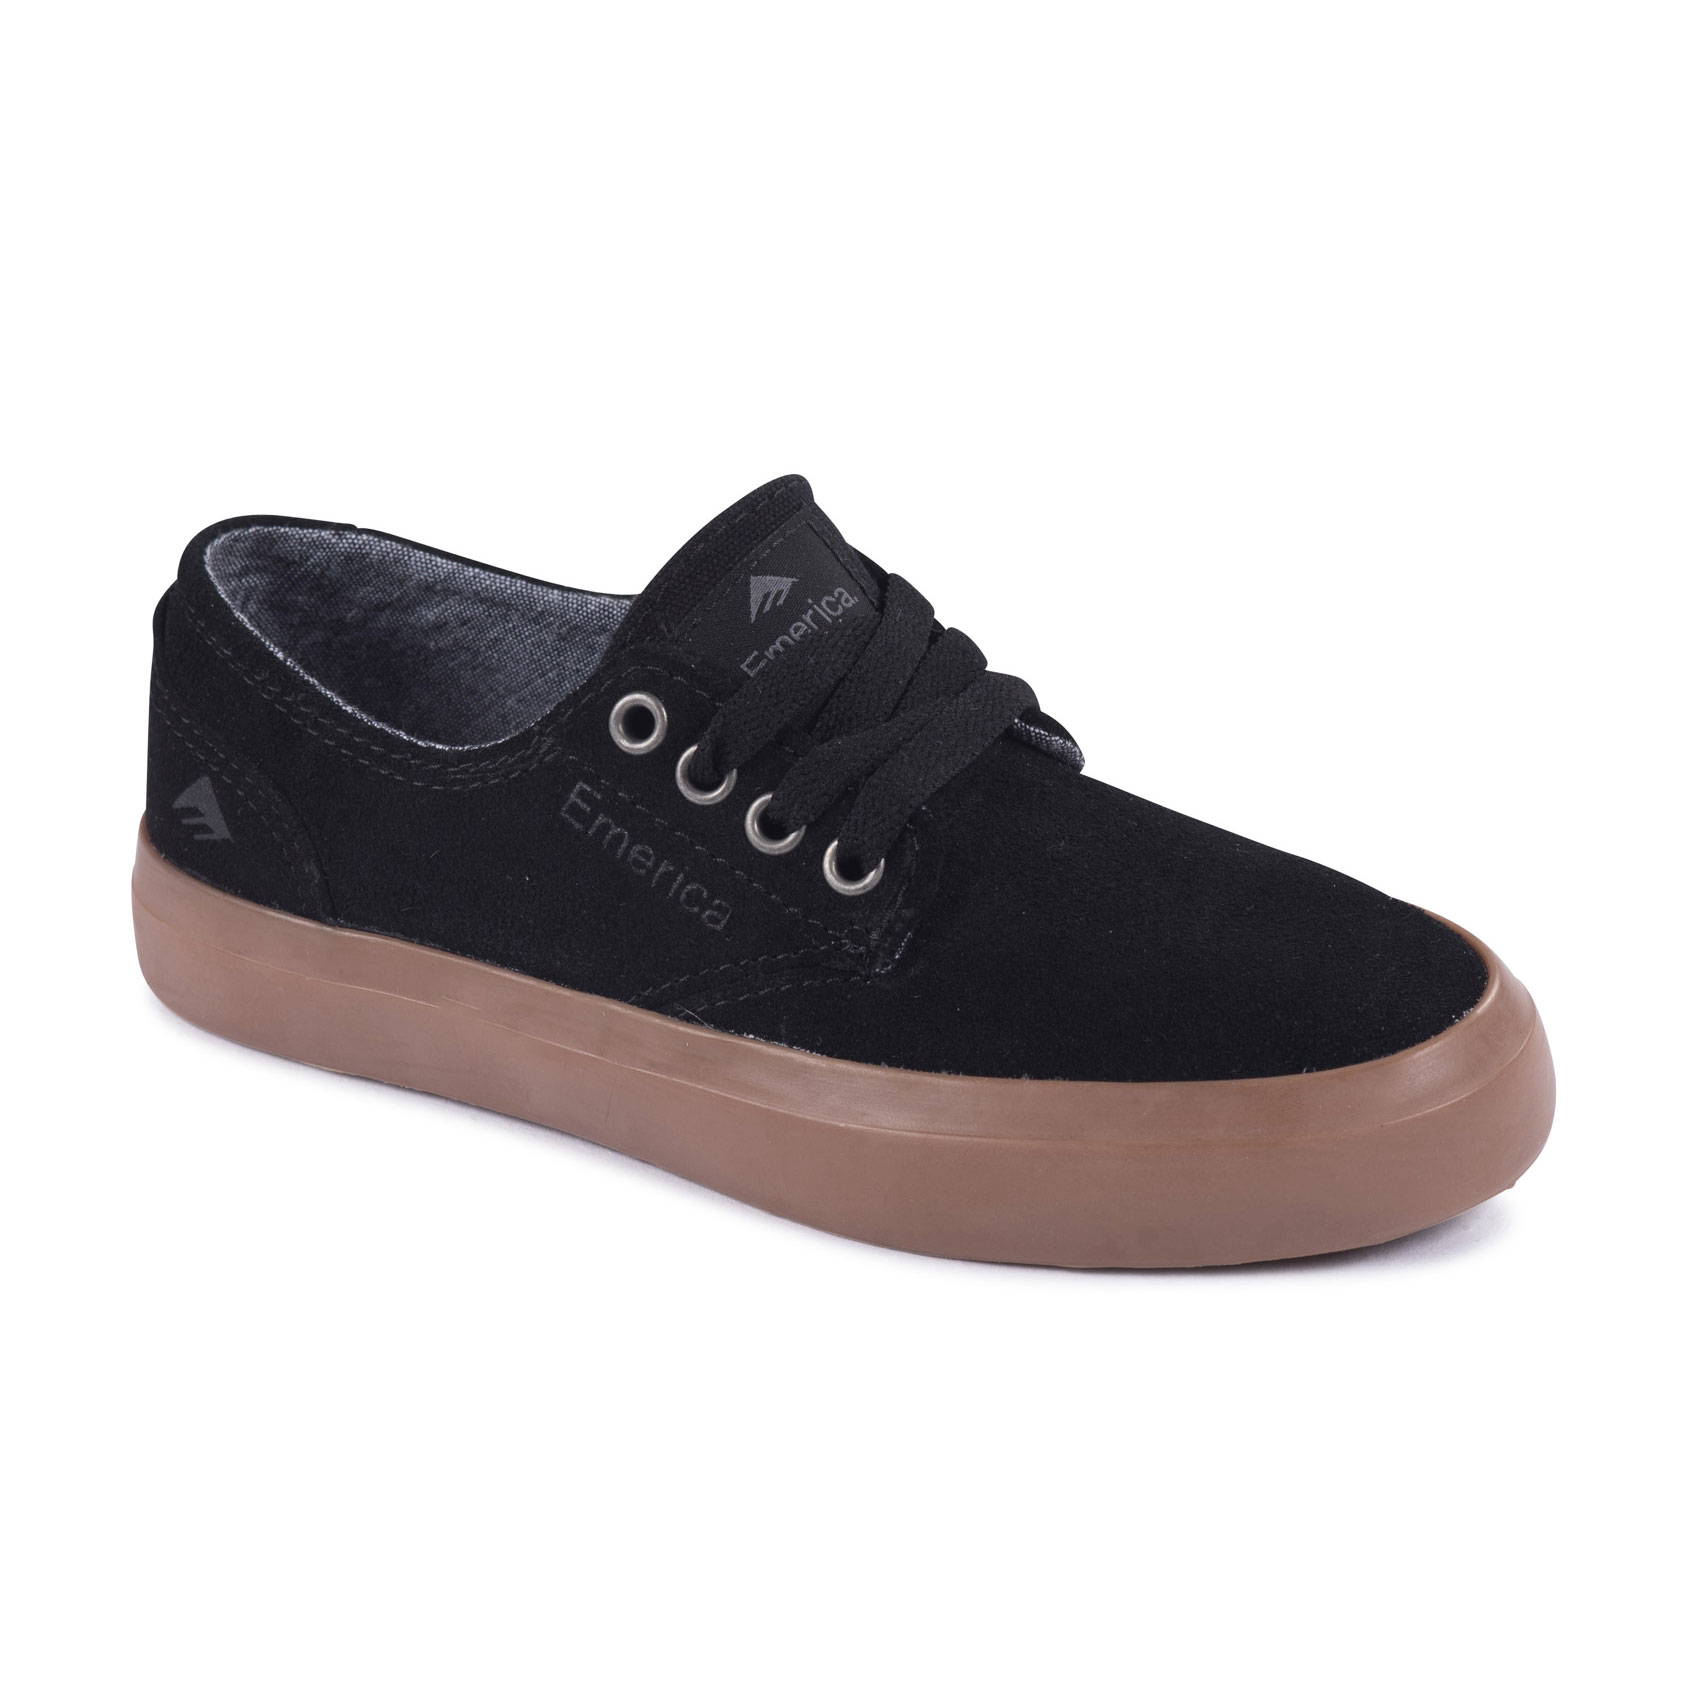 Farbe NEU: black/gum, Größe Schuhe: US 10C